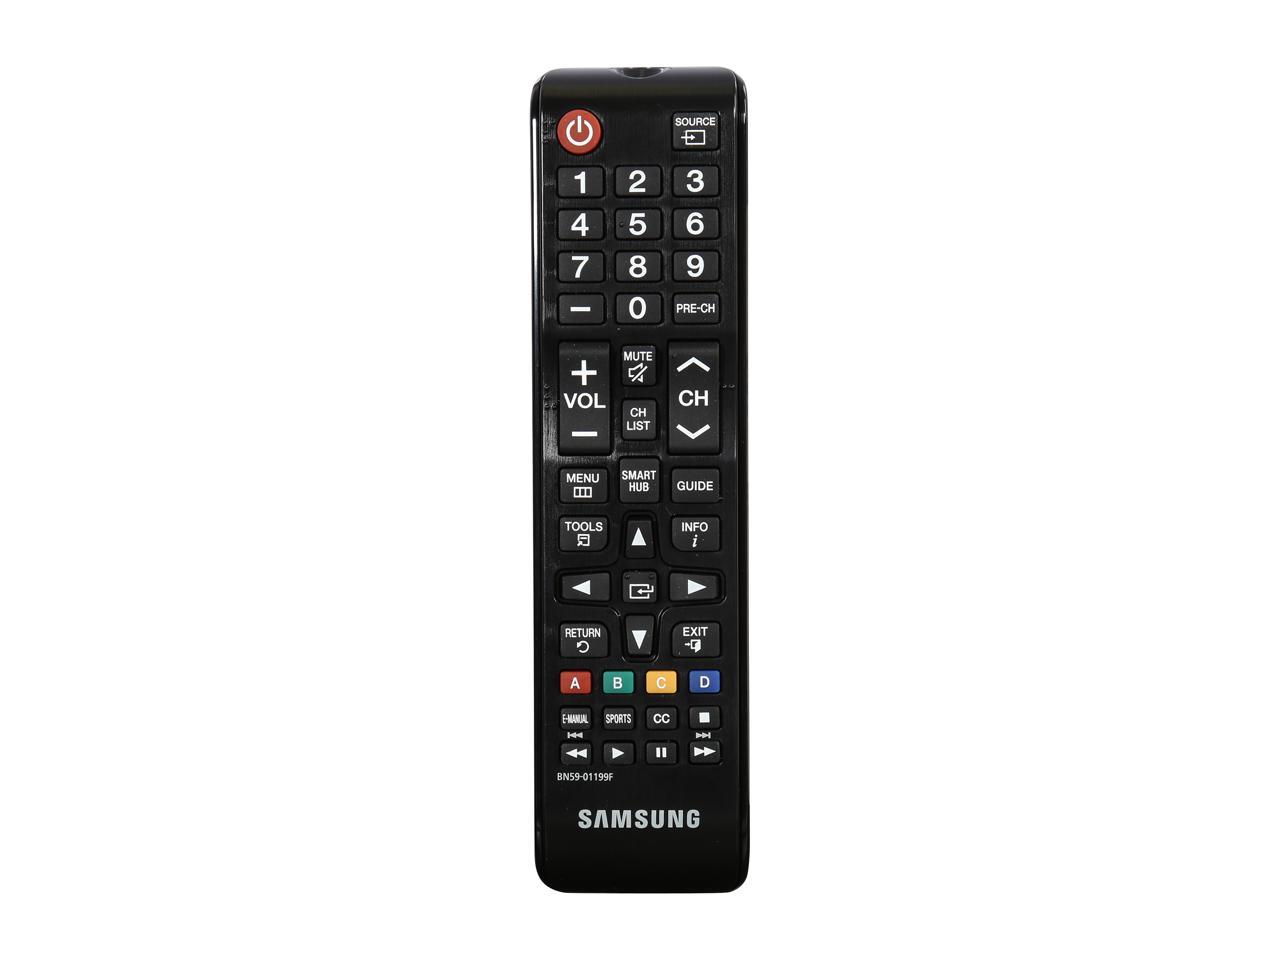 Samsung Un40j5200afxza 40 Inch 1080p Hd Smart Led Tv Newegg Com